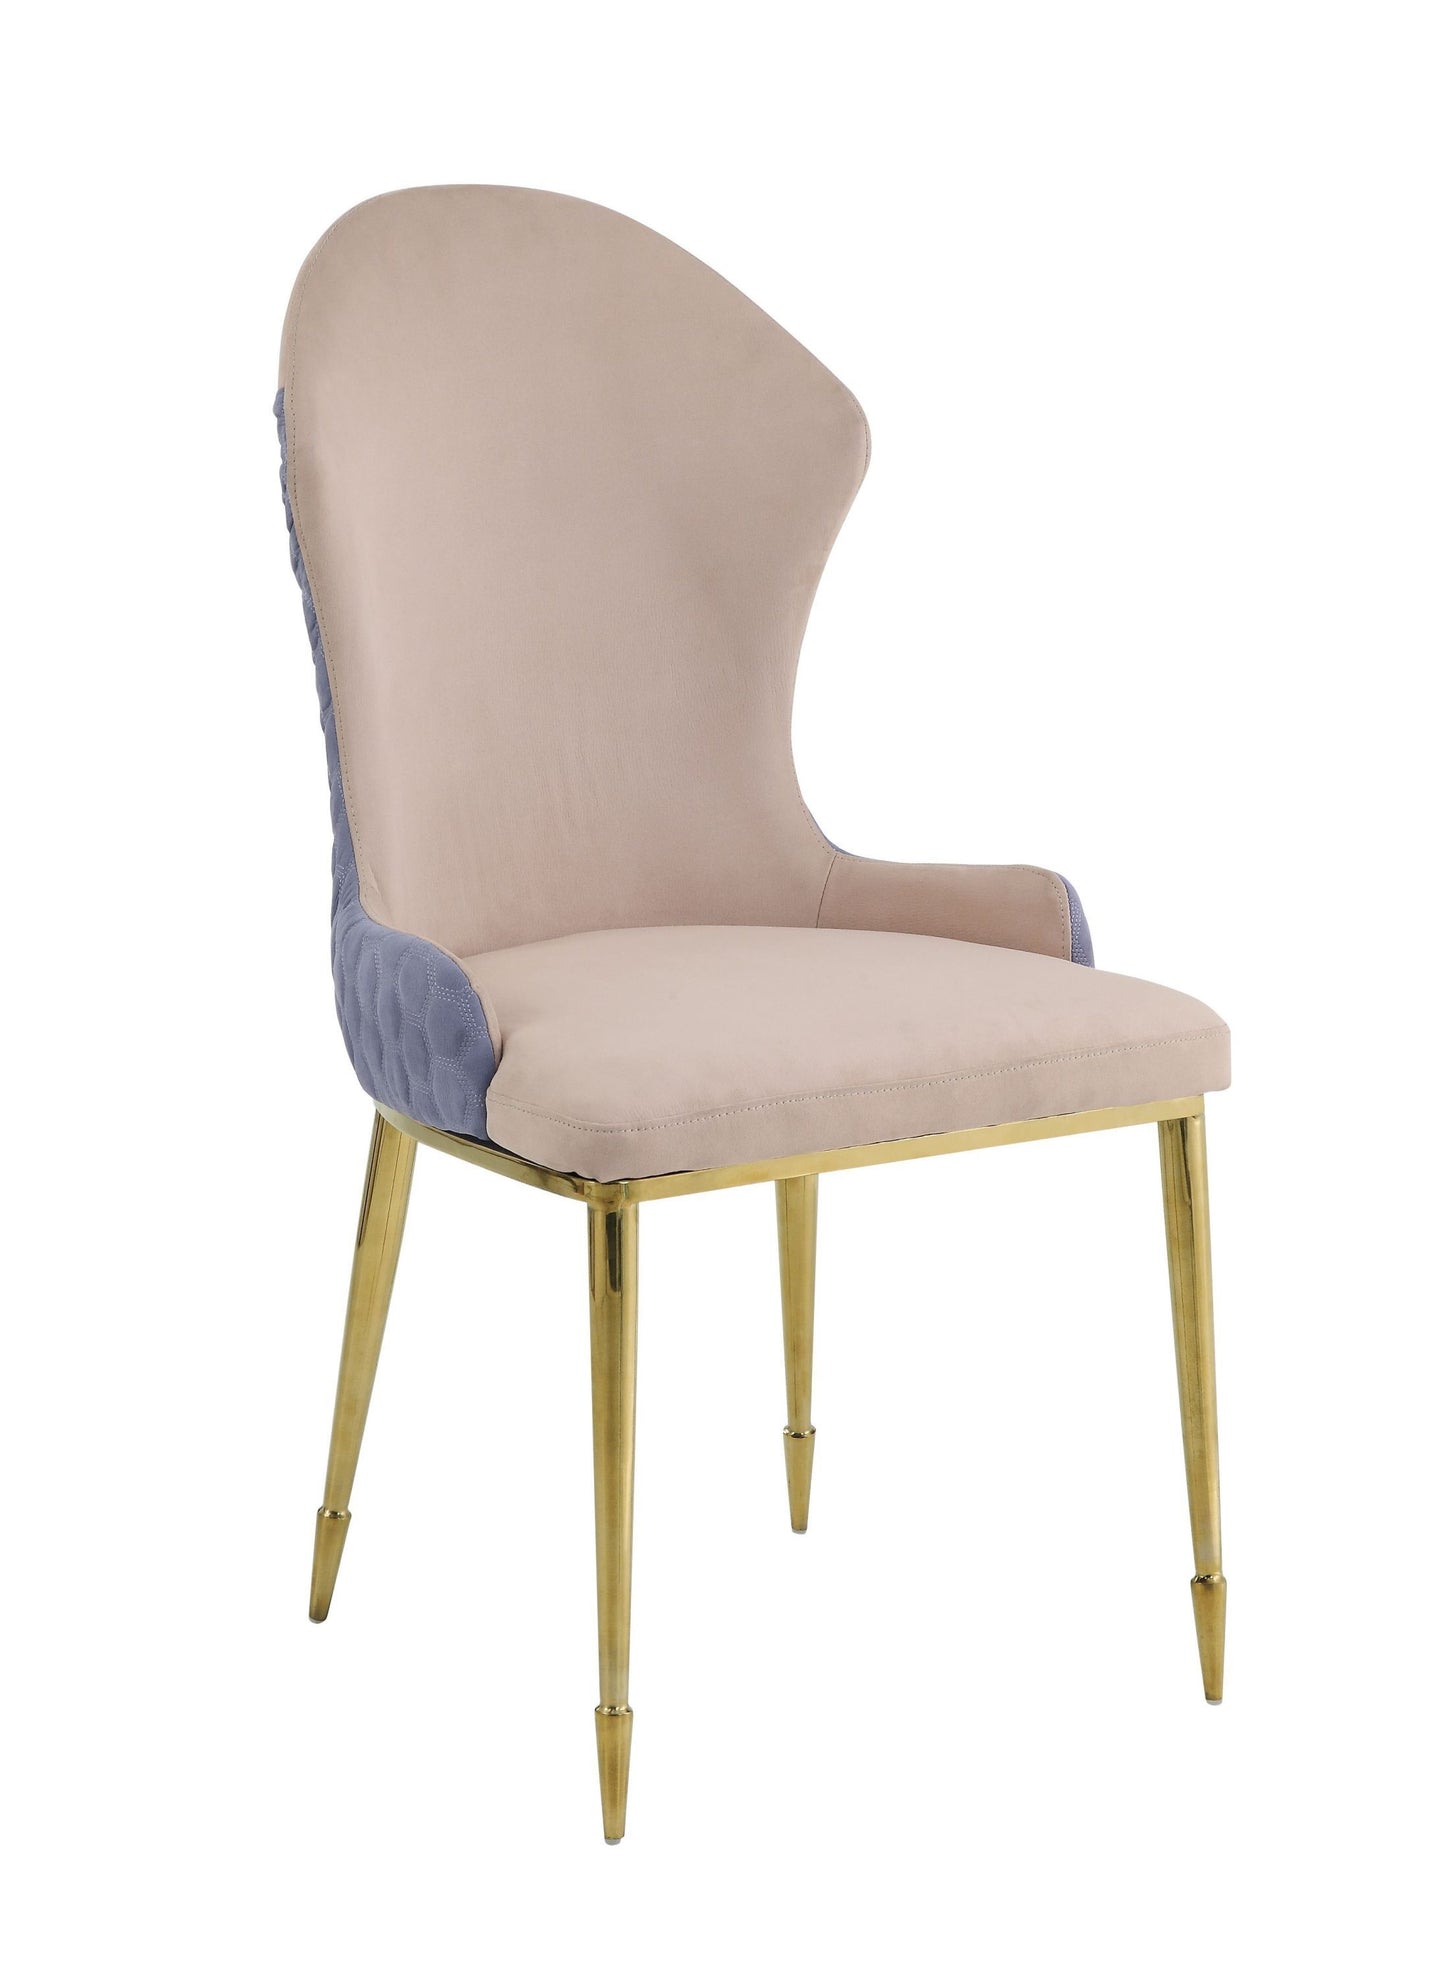 ACME Caolan Side Chair (Set-2), Tan, Lavender Fabric & Gold  72469 - Enova Luxe Home Store